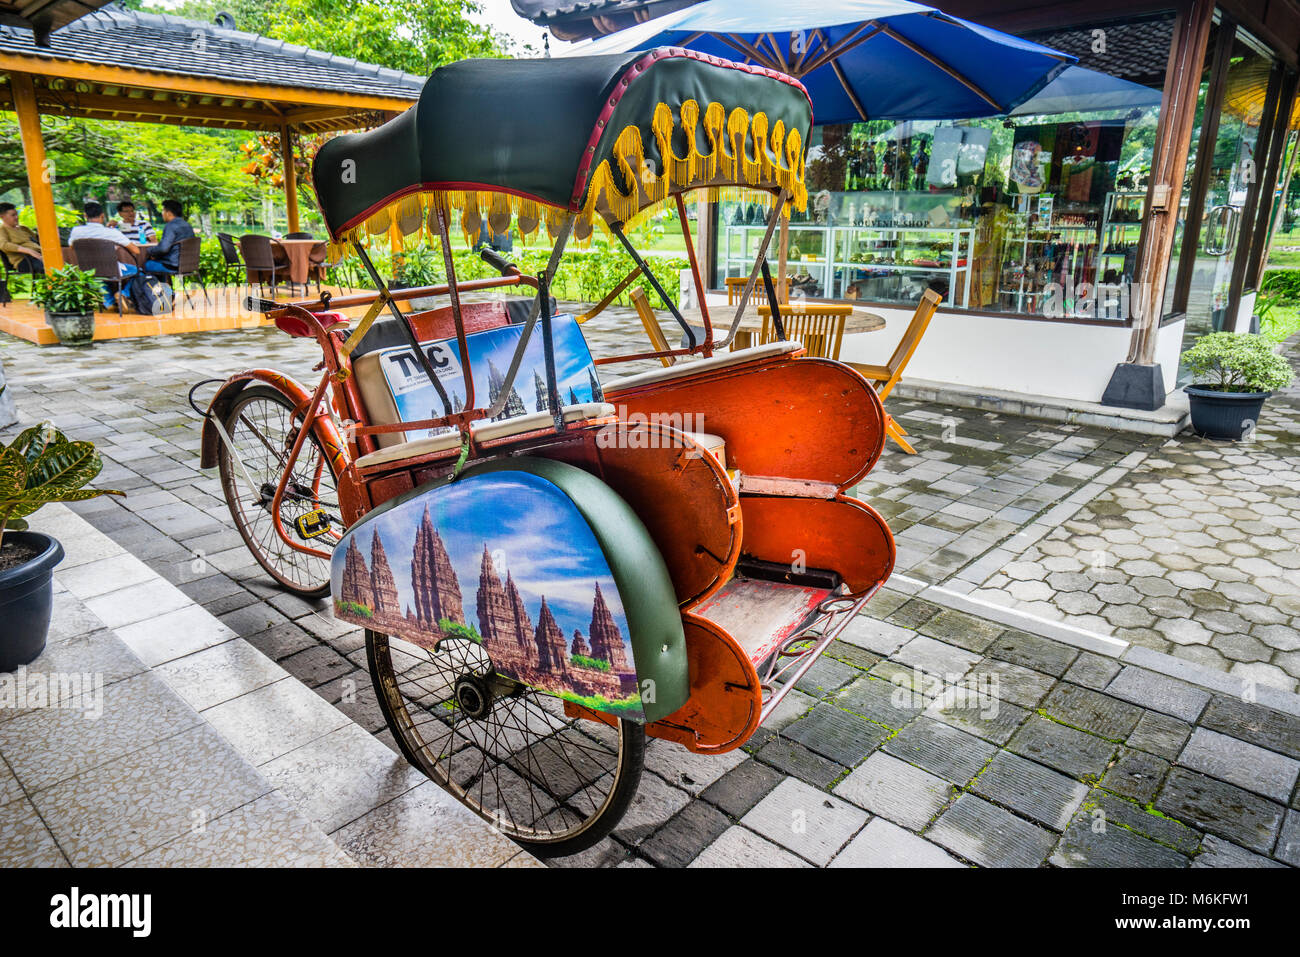 Indonesia, Central Java, a Becak cycle rickshaw at the Prambanan Garden Restaurant Stock Photo